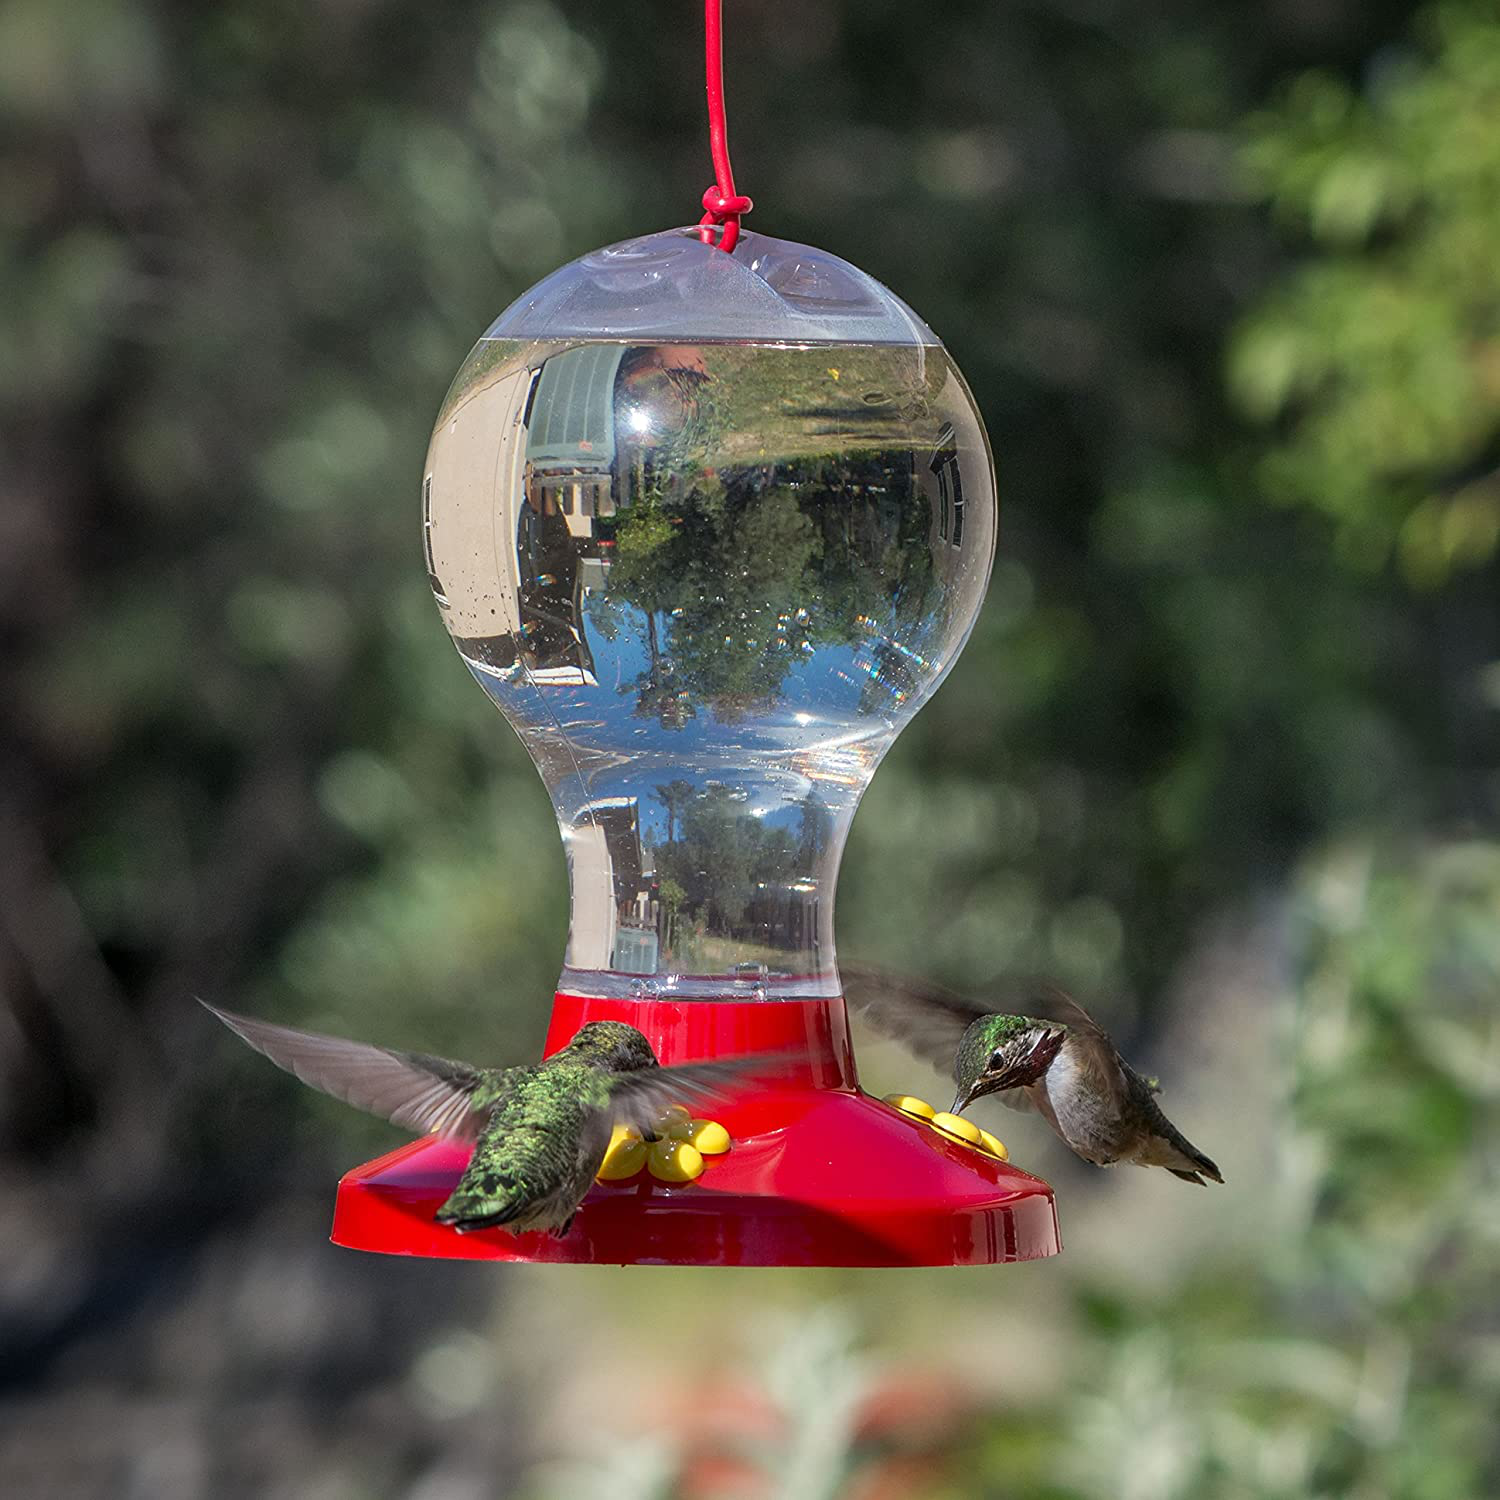 Clear Plastic Hummingbird Feeder - 16 oz